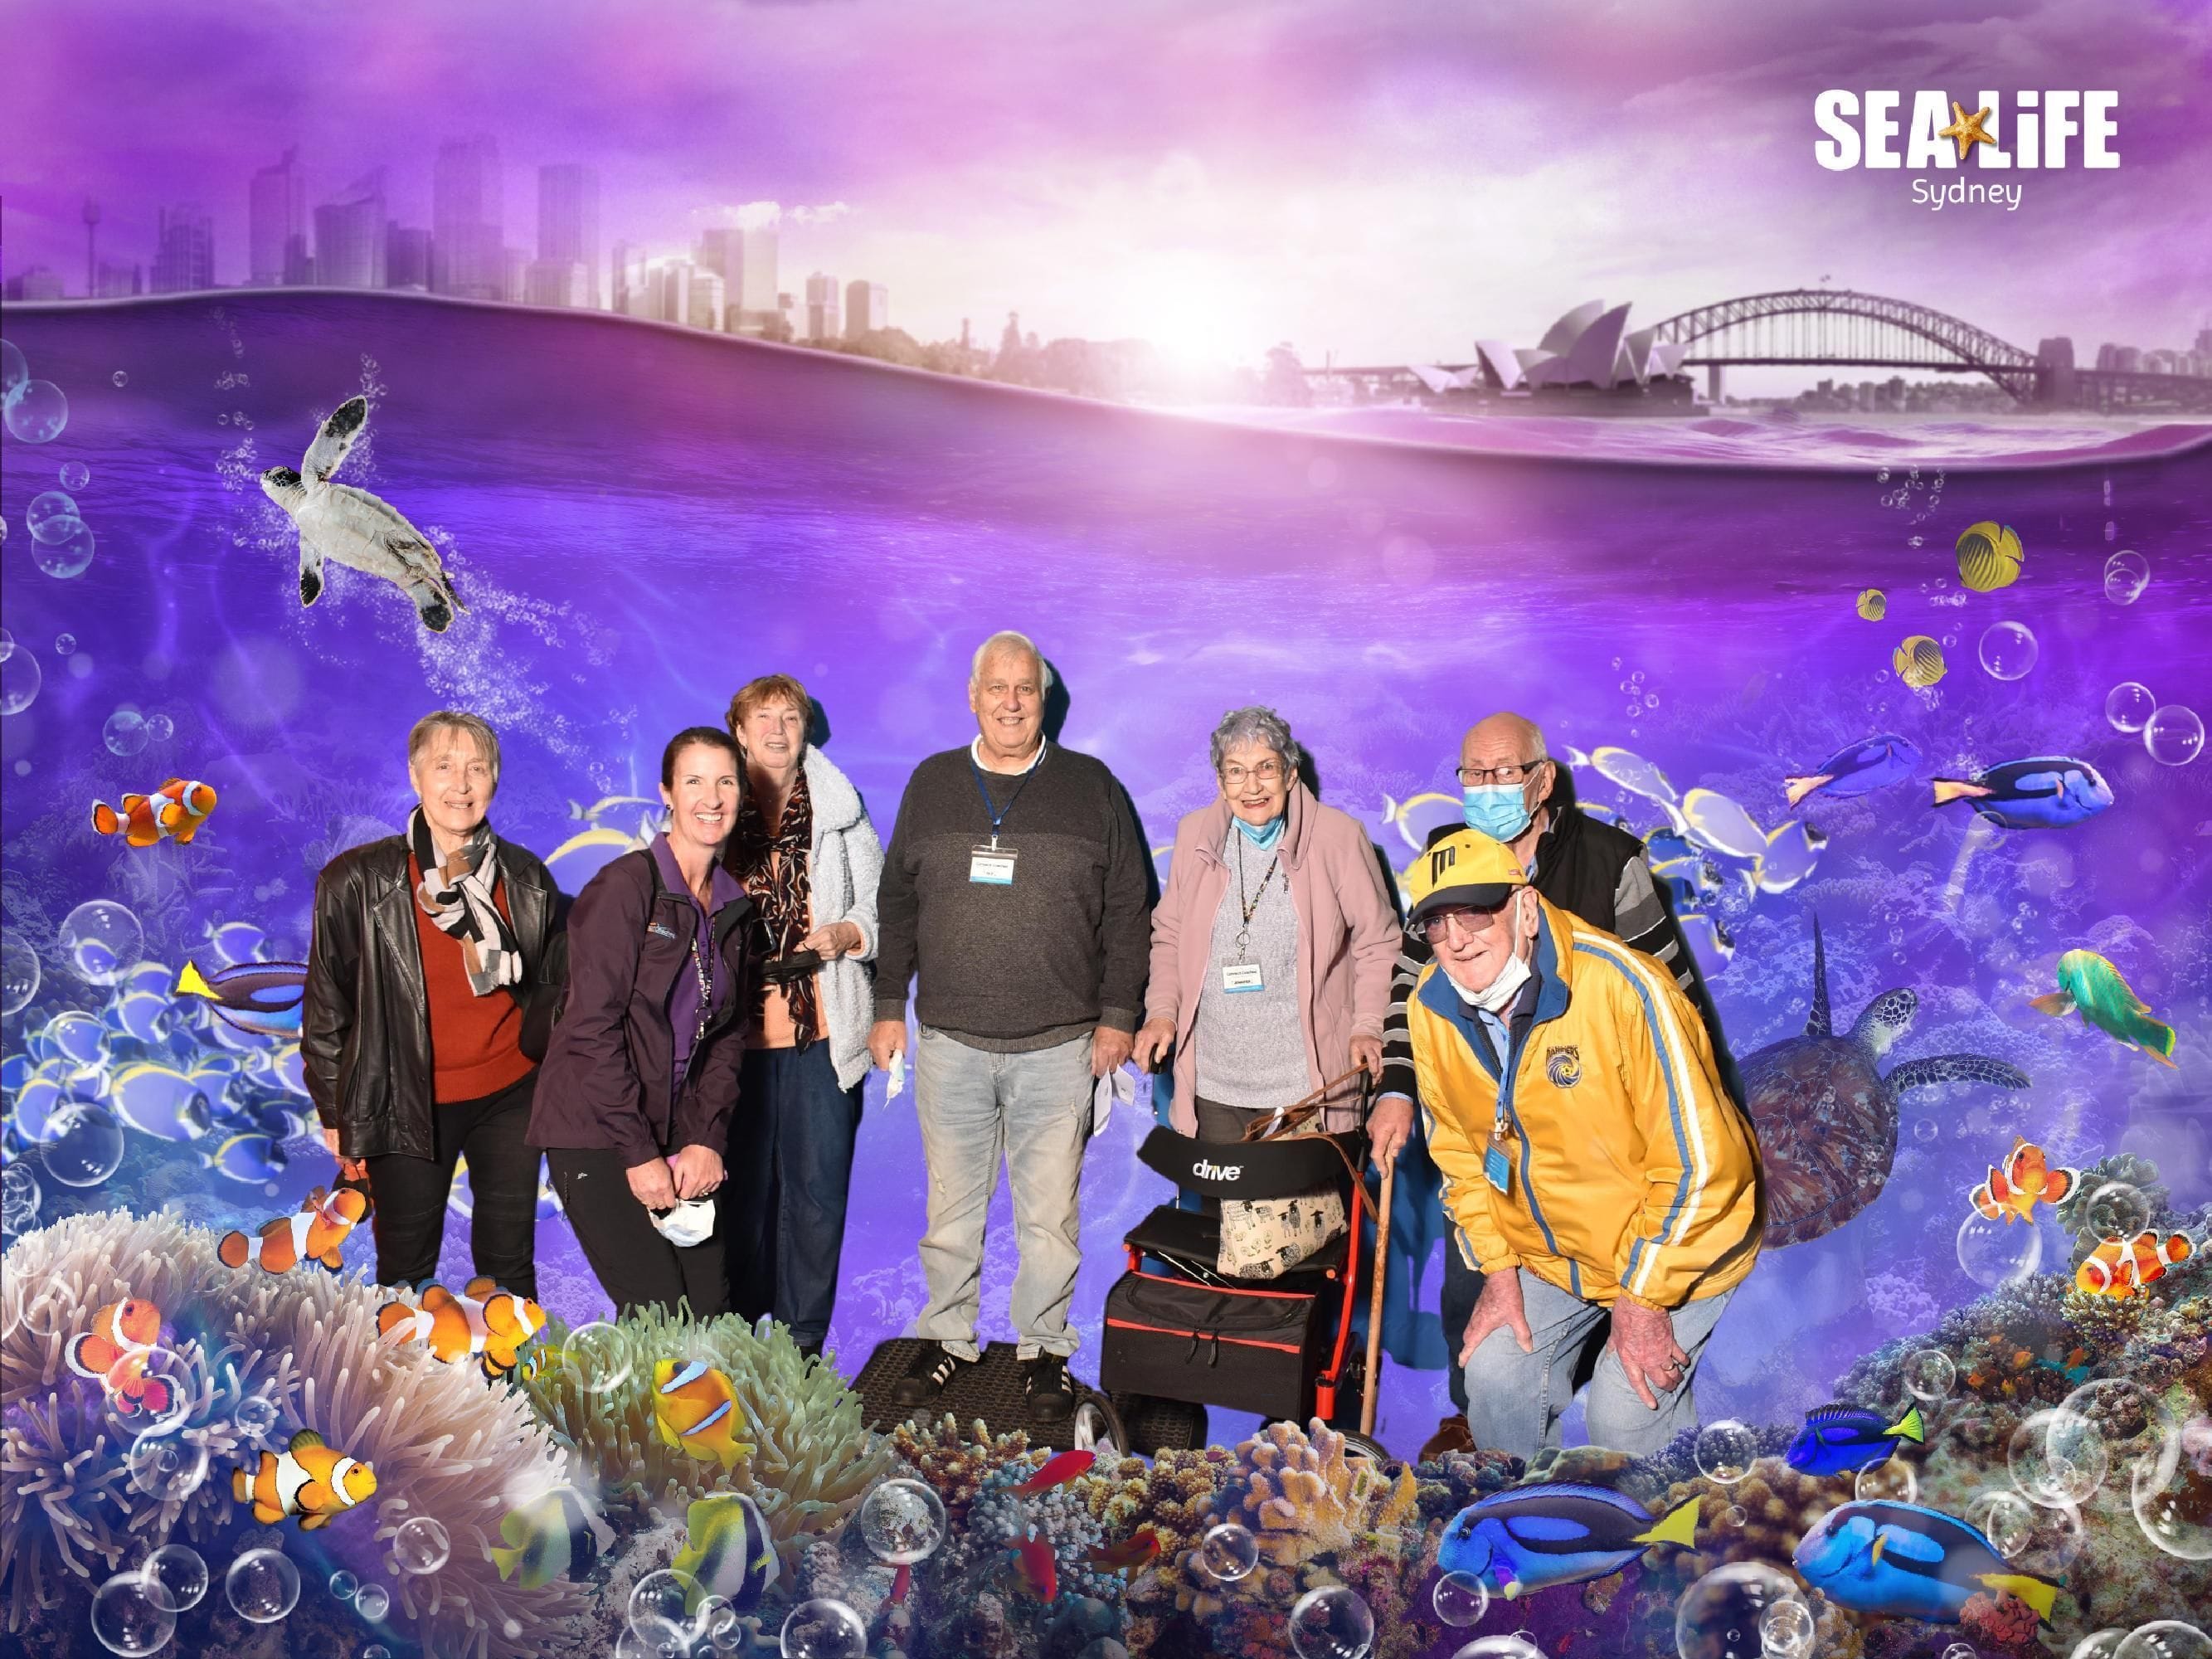 Sealife Sydney Aquarium - 12th July 2022 Image -62cd26b6293cd